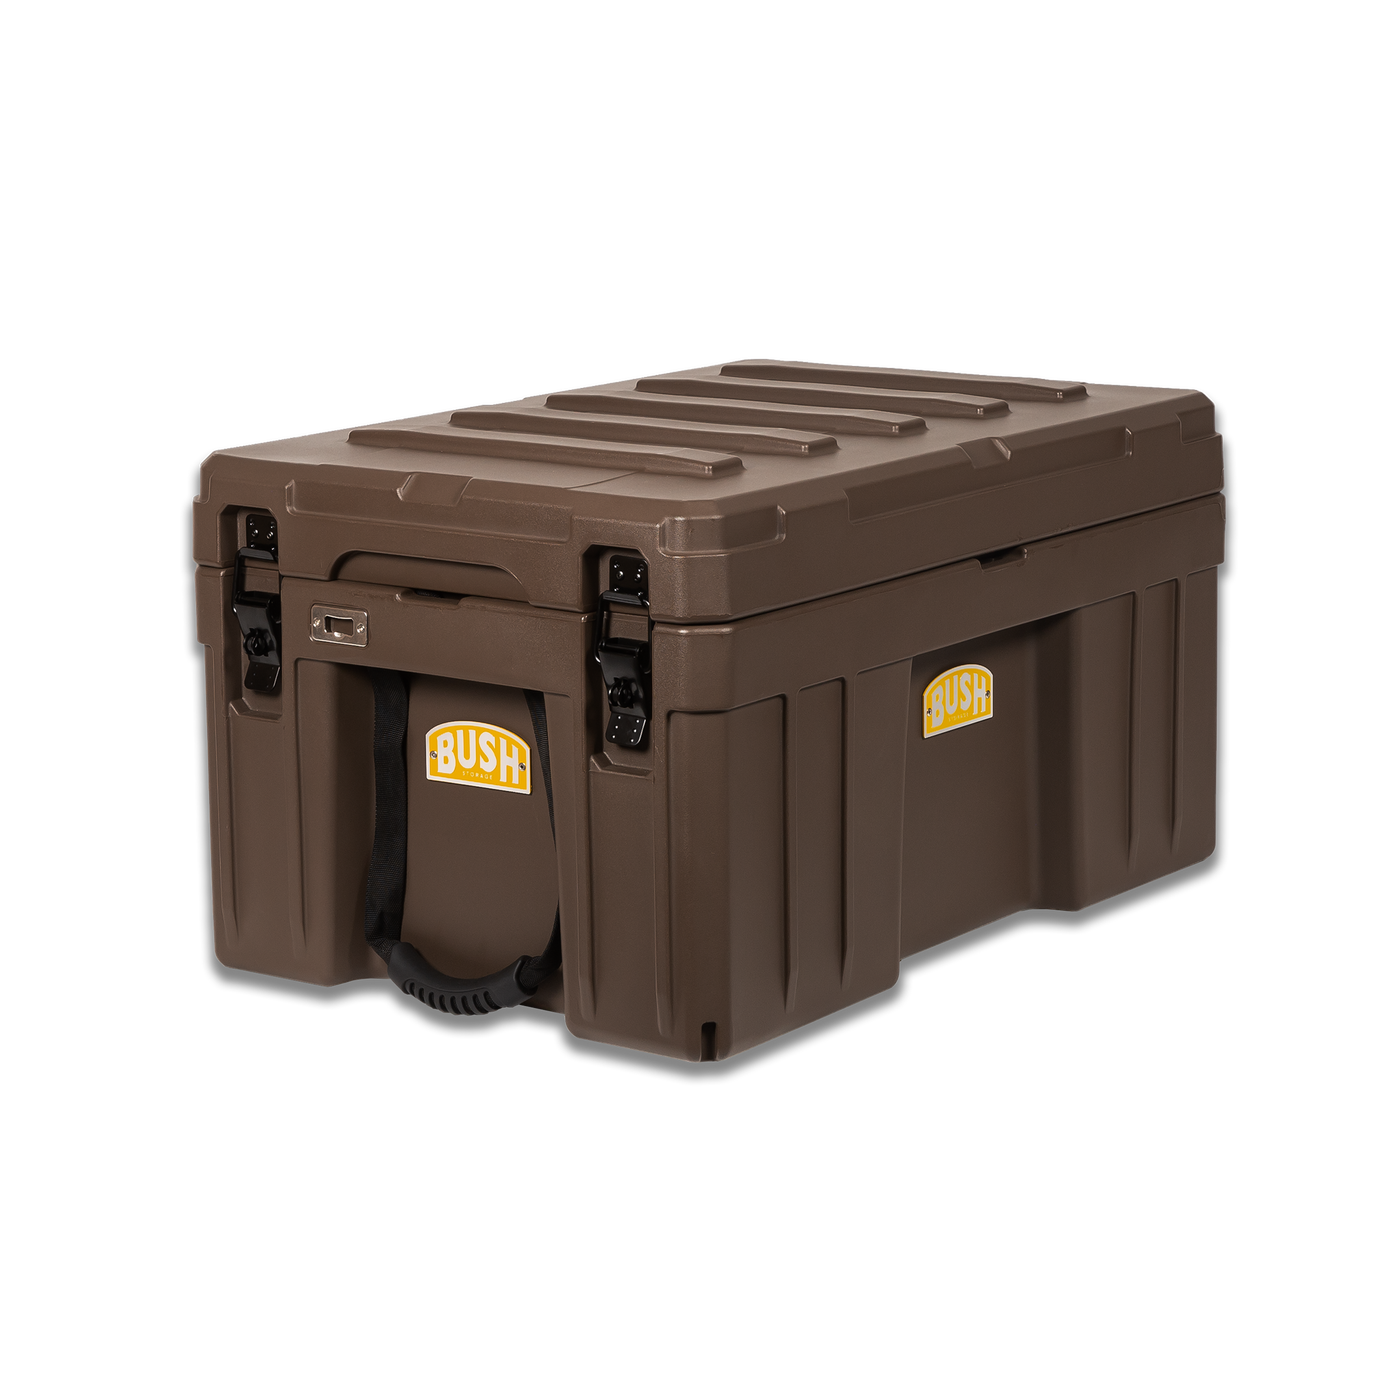 Cargo Crate - 85L